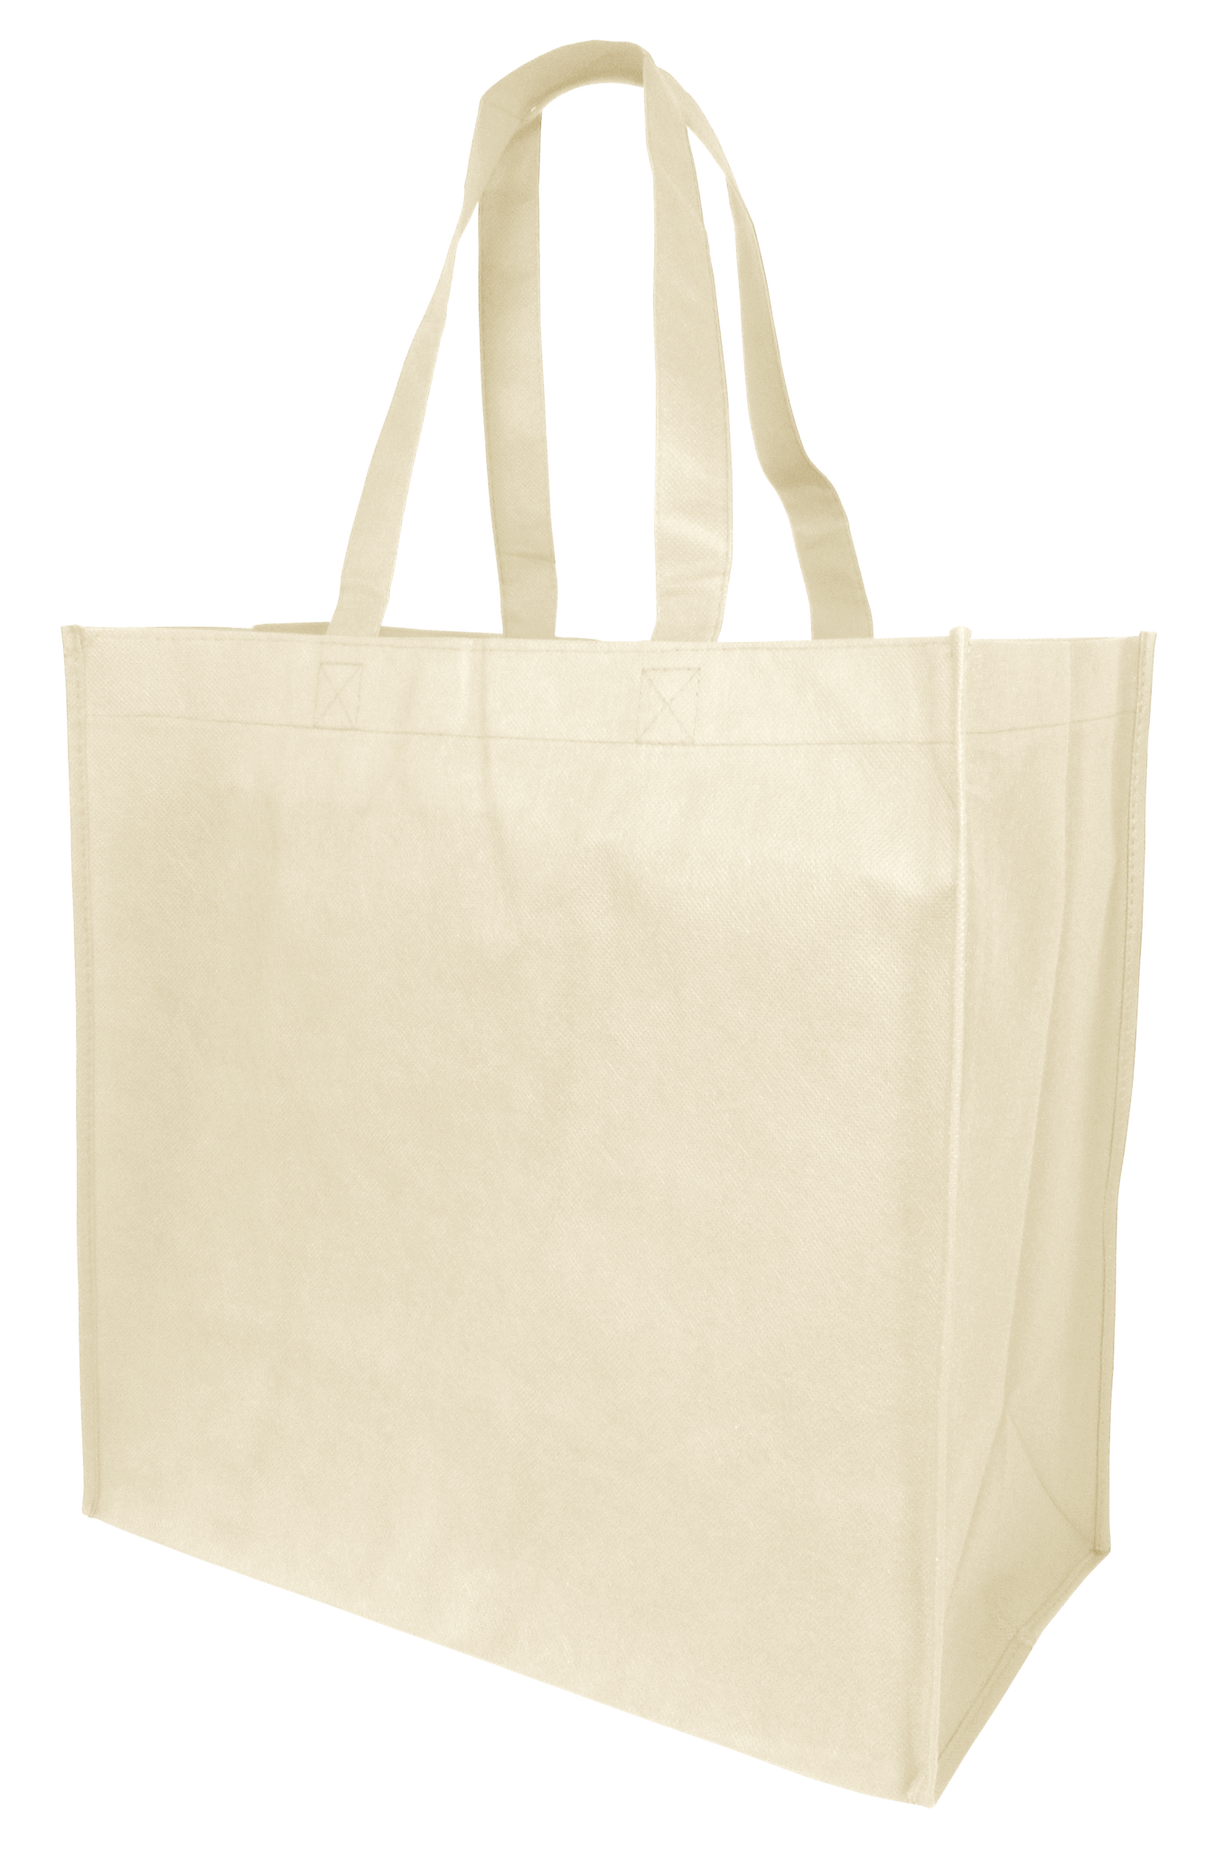 Jumbo Promotional Tote Bags natural